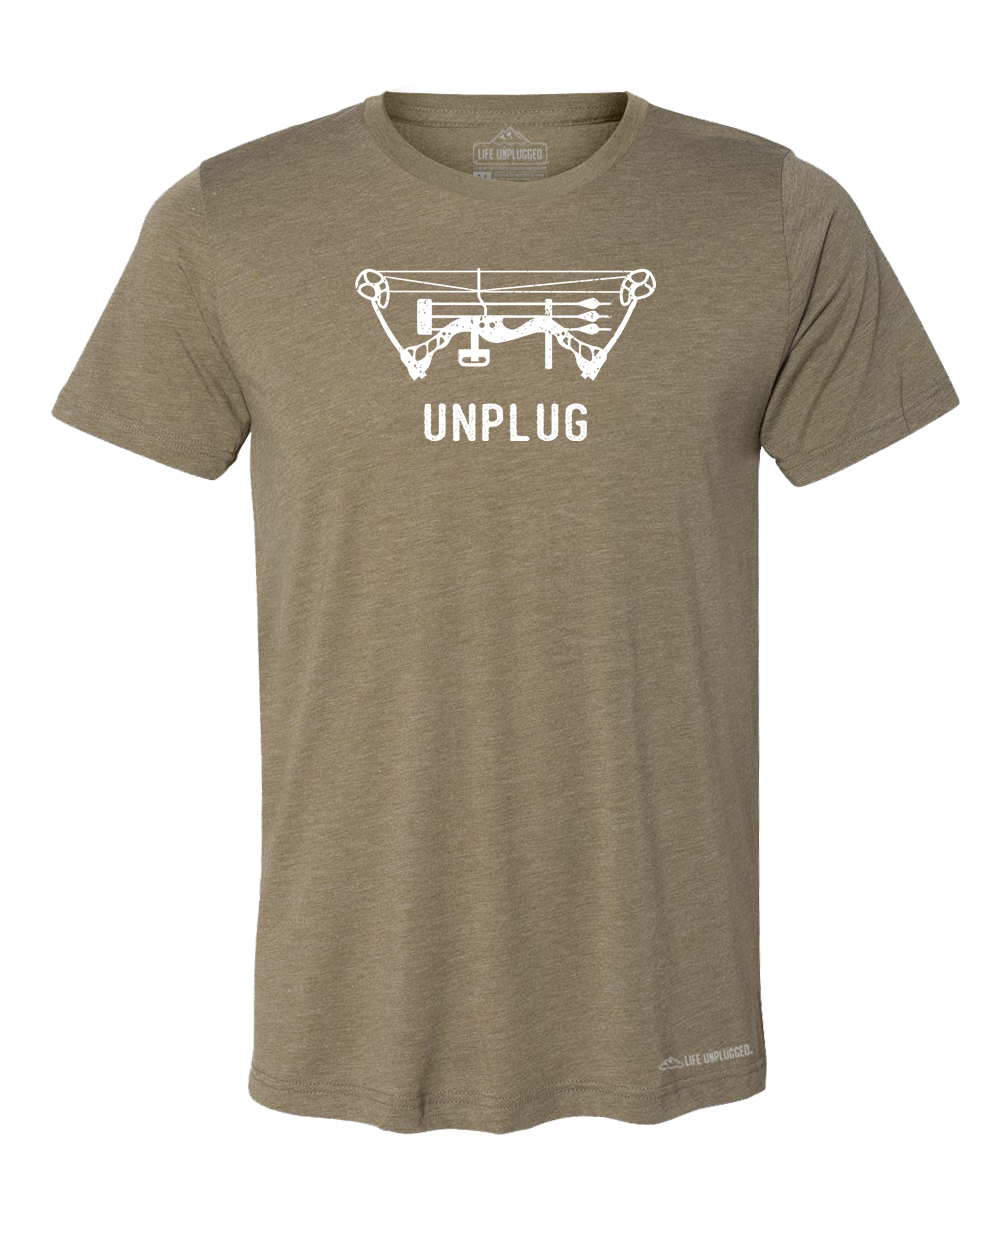 Bow Hunting Premium Triblend T-Shirt - Life Unplugged